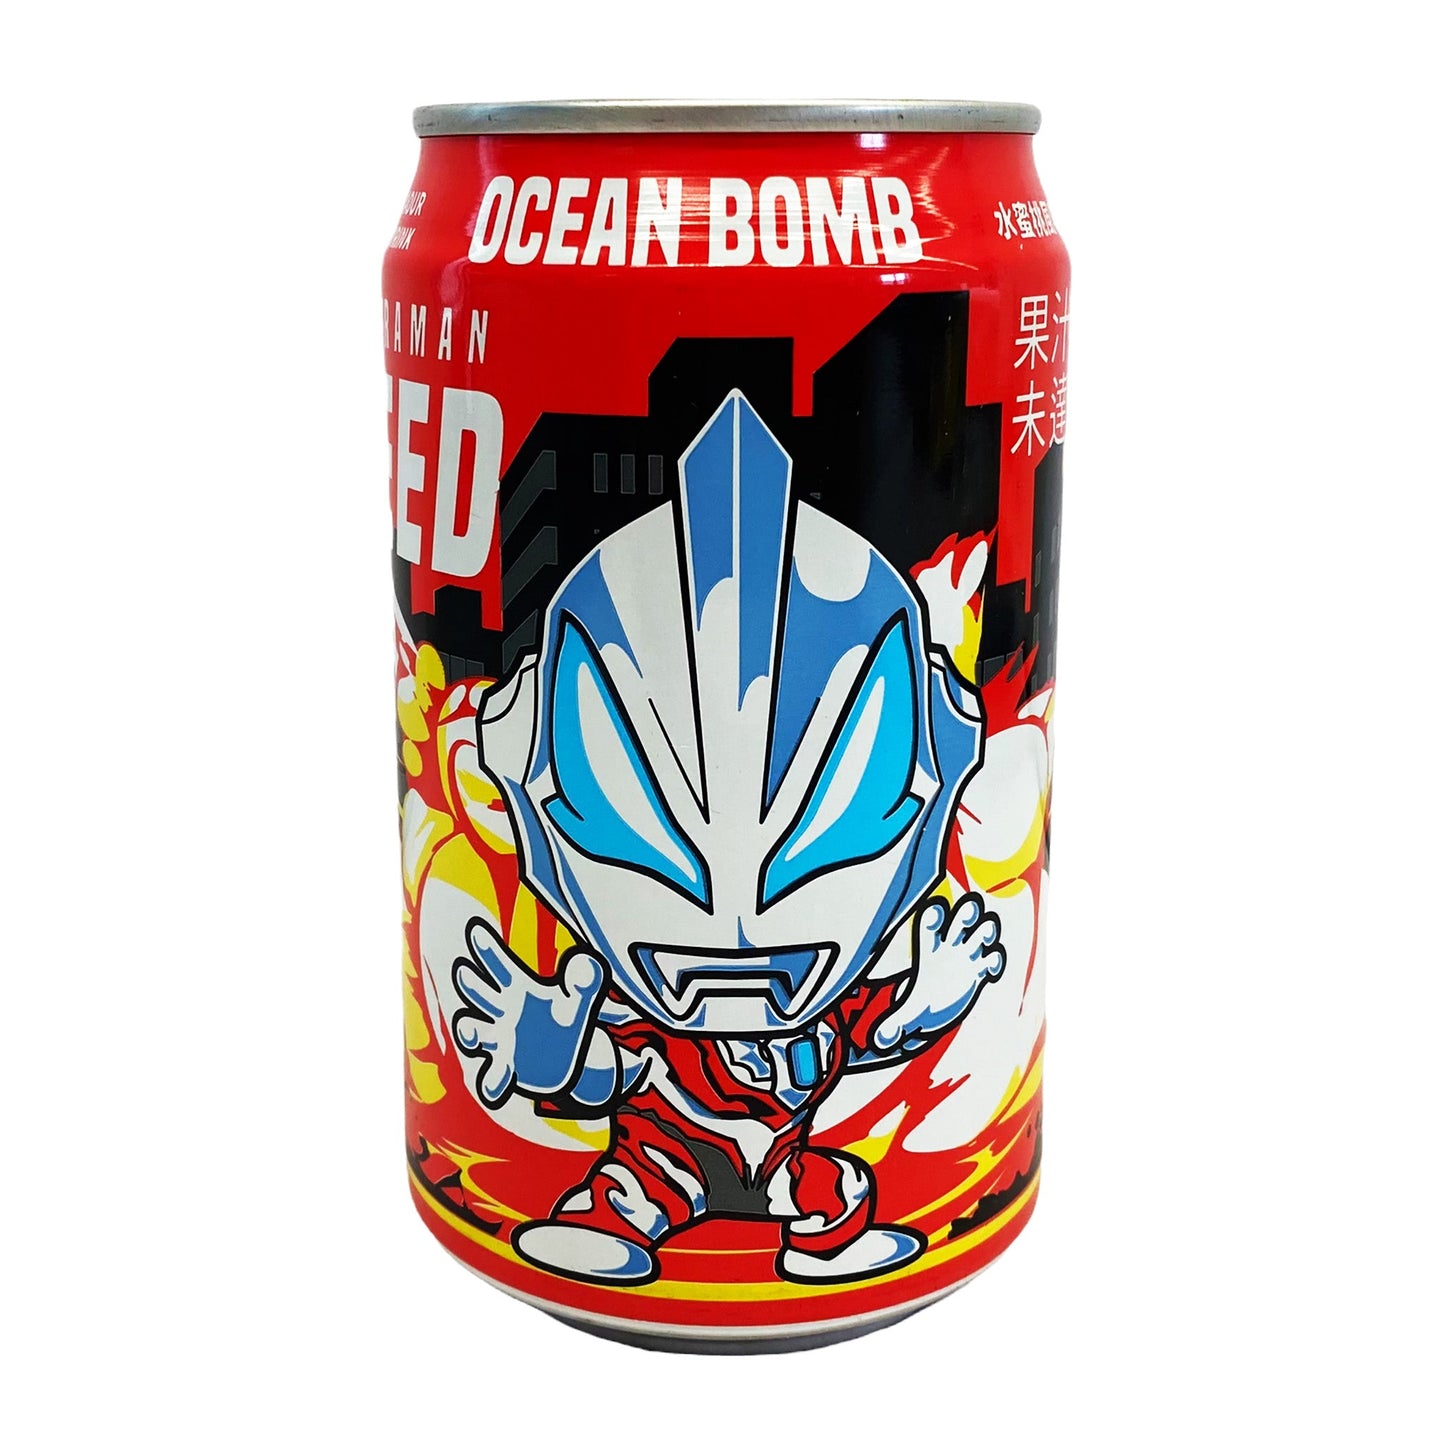 Ocean Bomb Ultraman Geed Sparkling Water - Peach (330ml) (Taiwan) 6-Pack